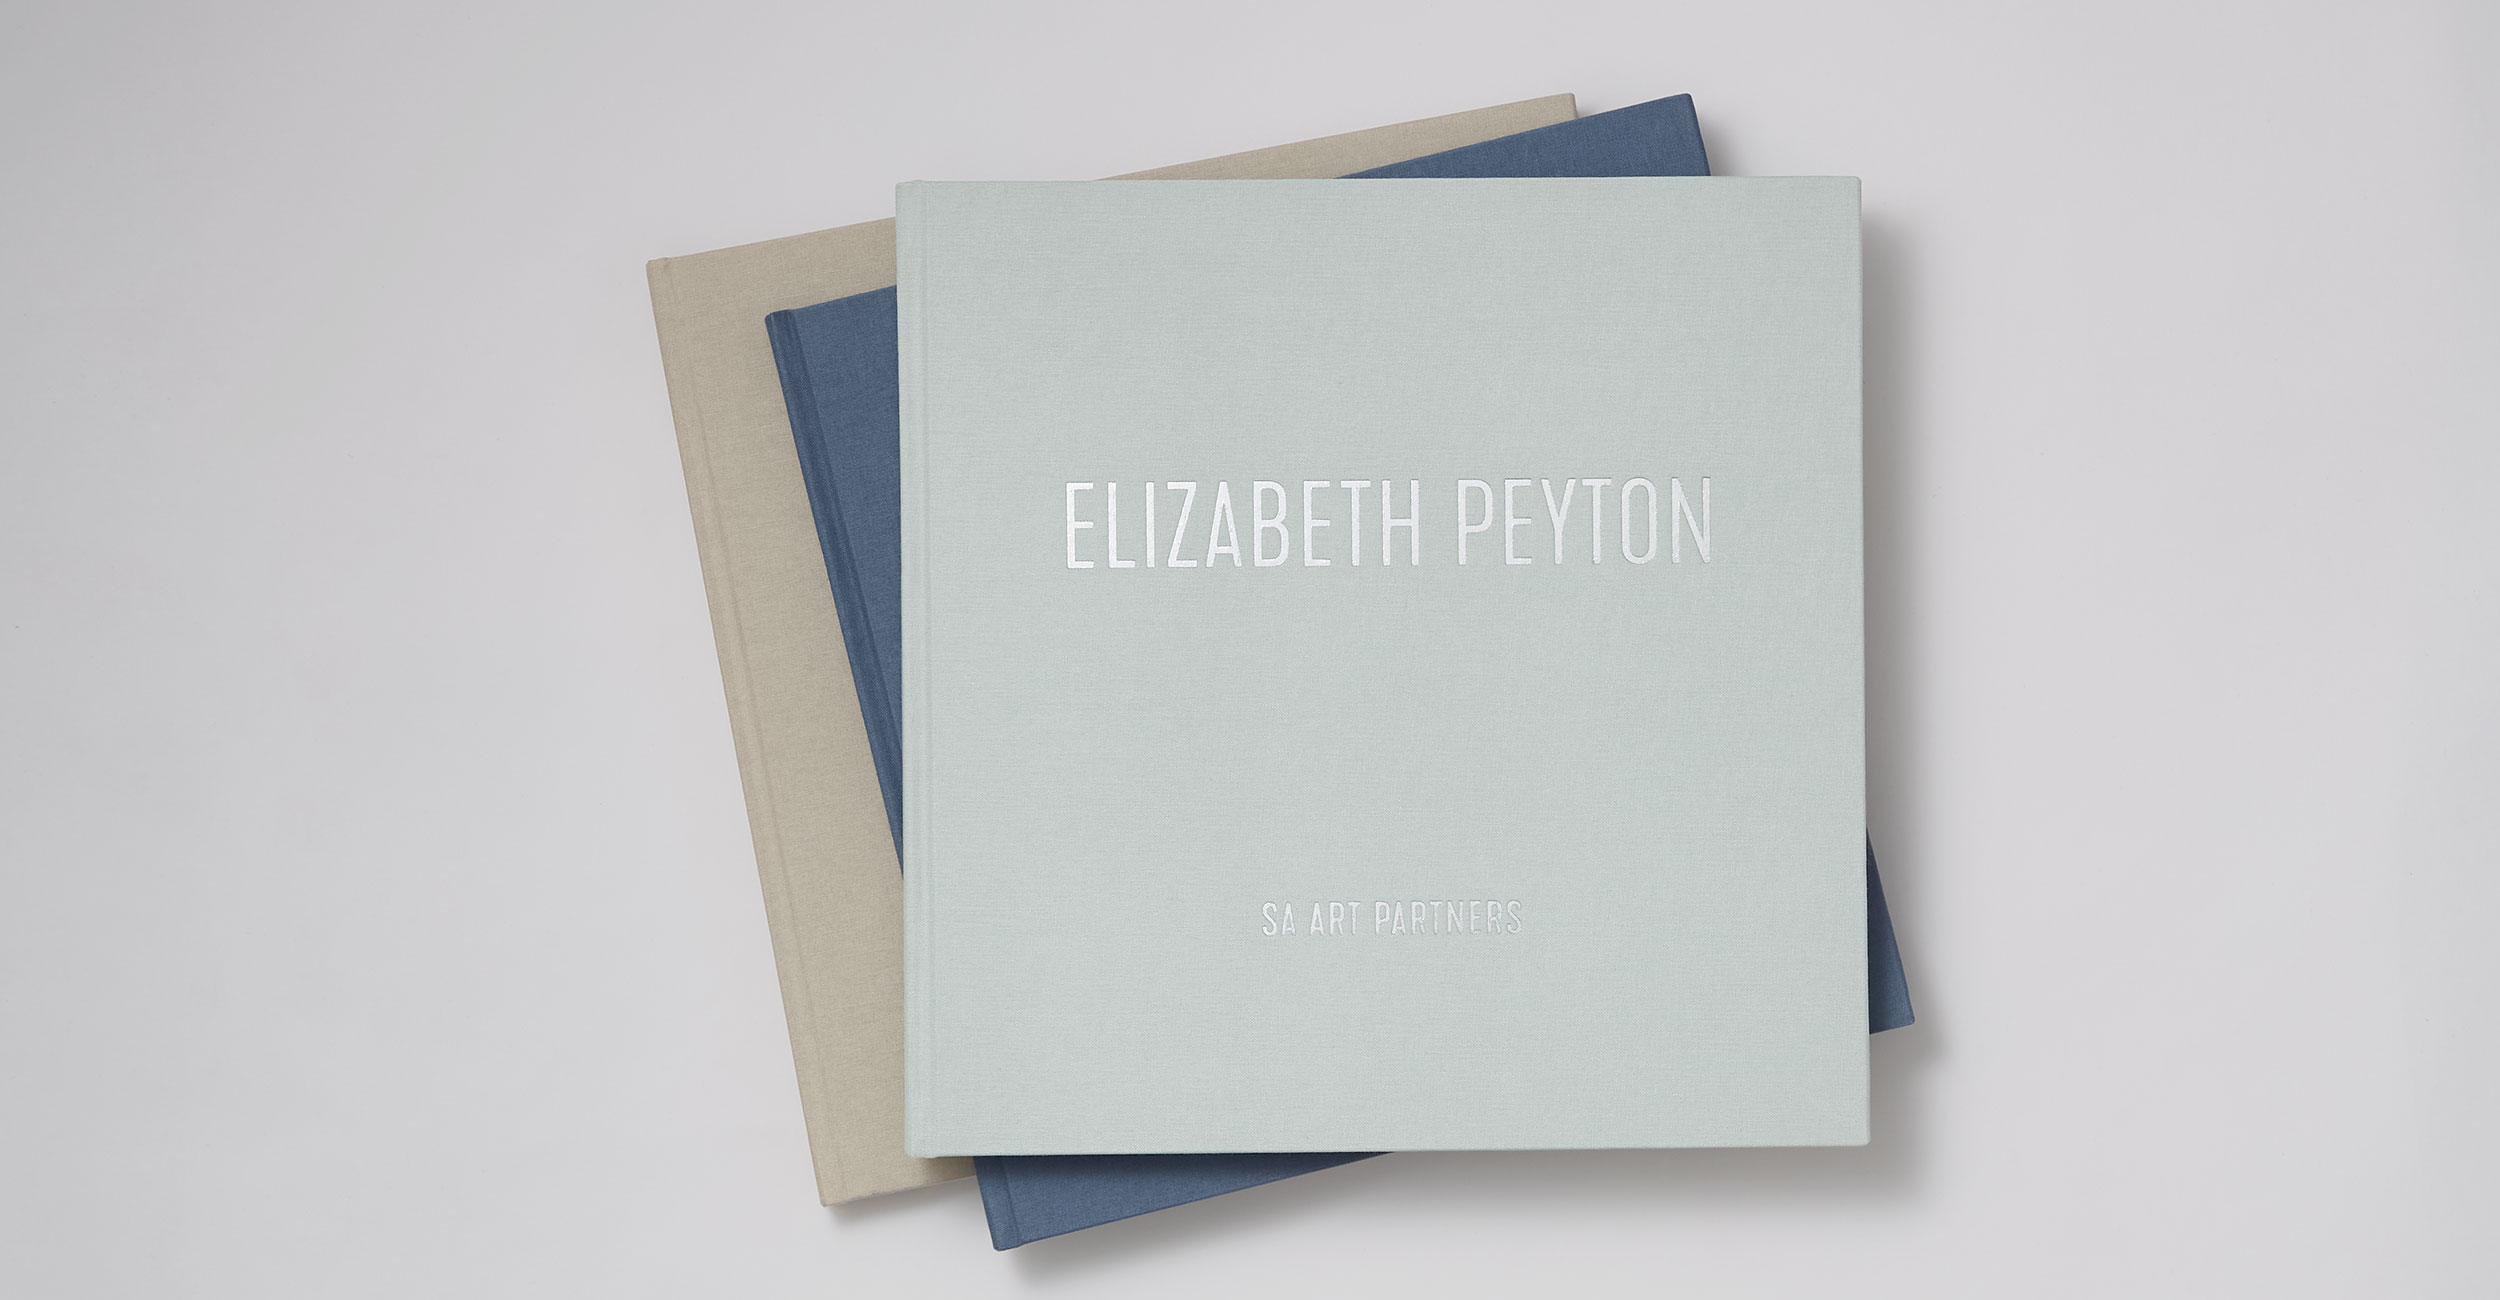 SA Art Partners Elizabeth Peyton Book